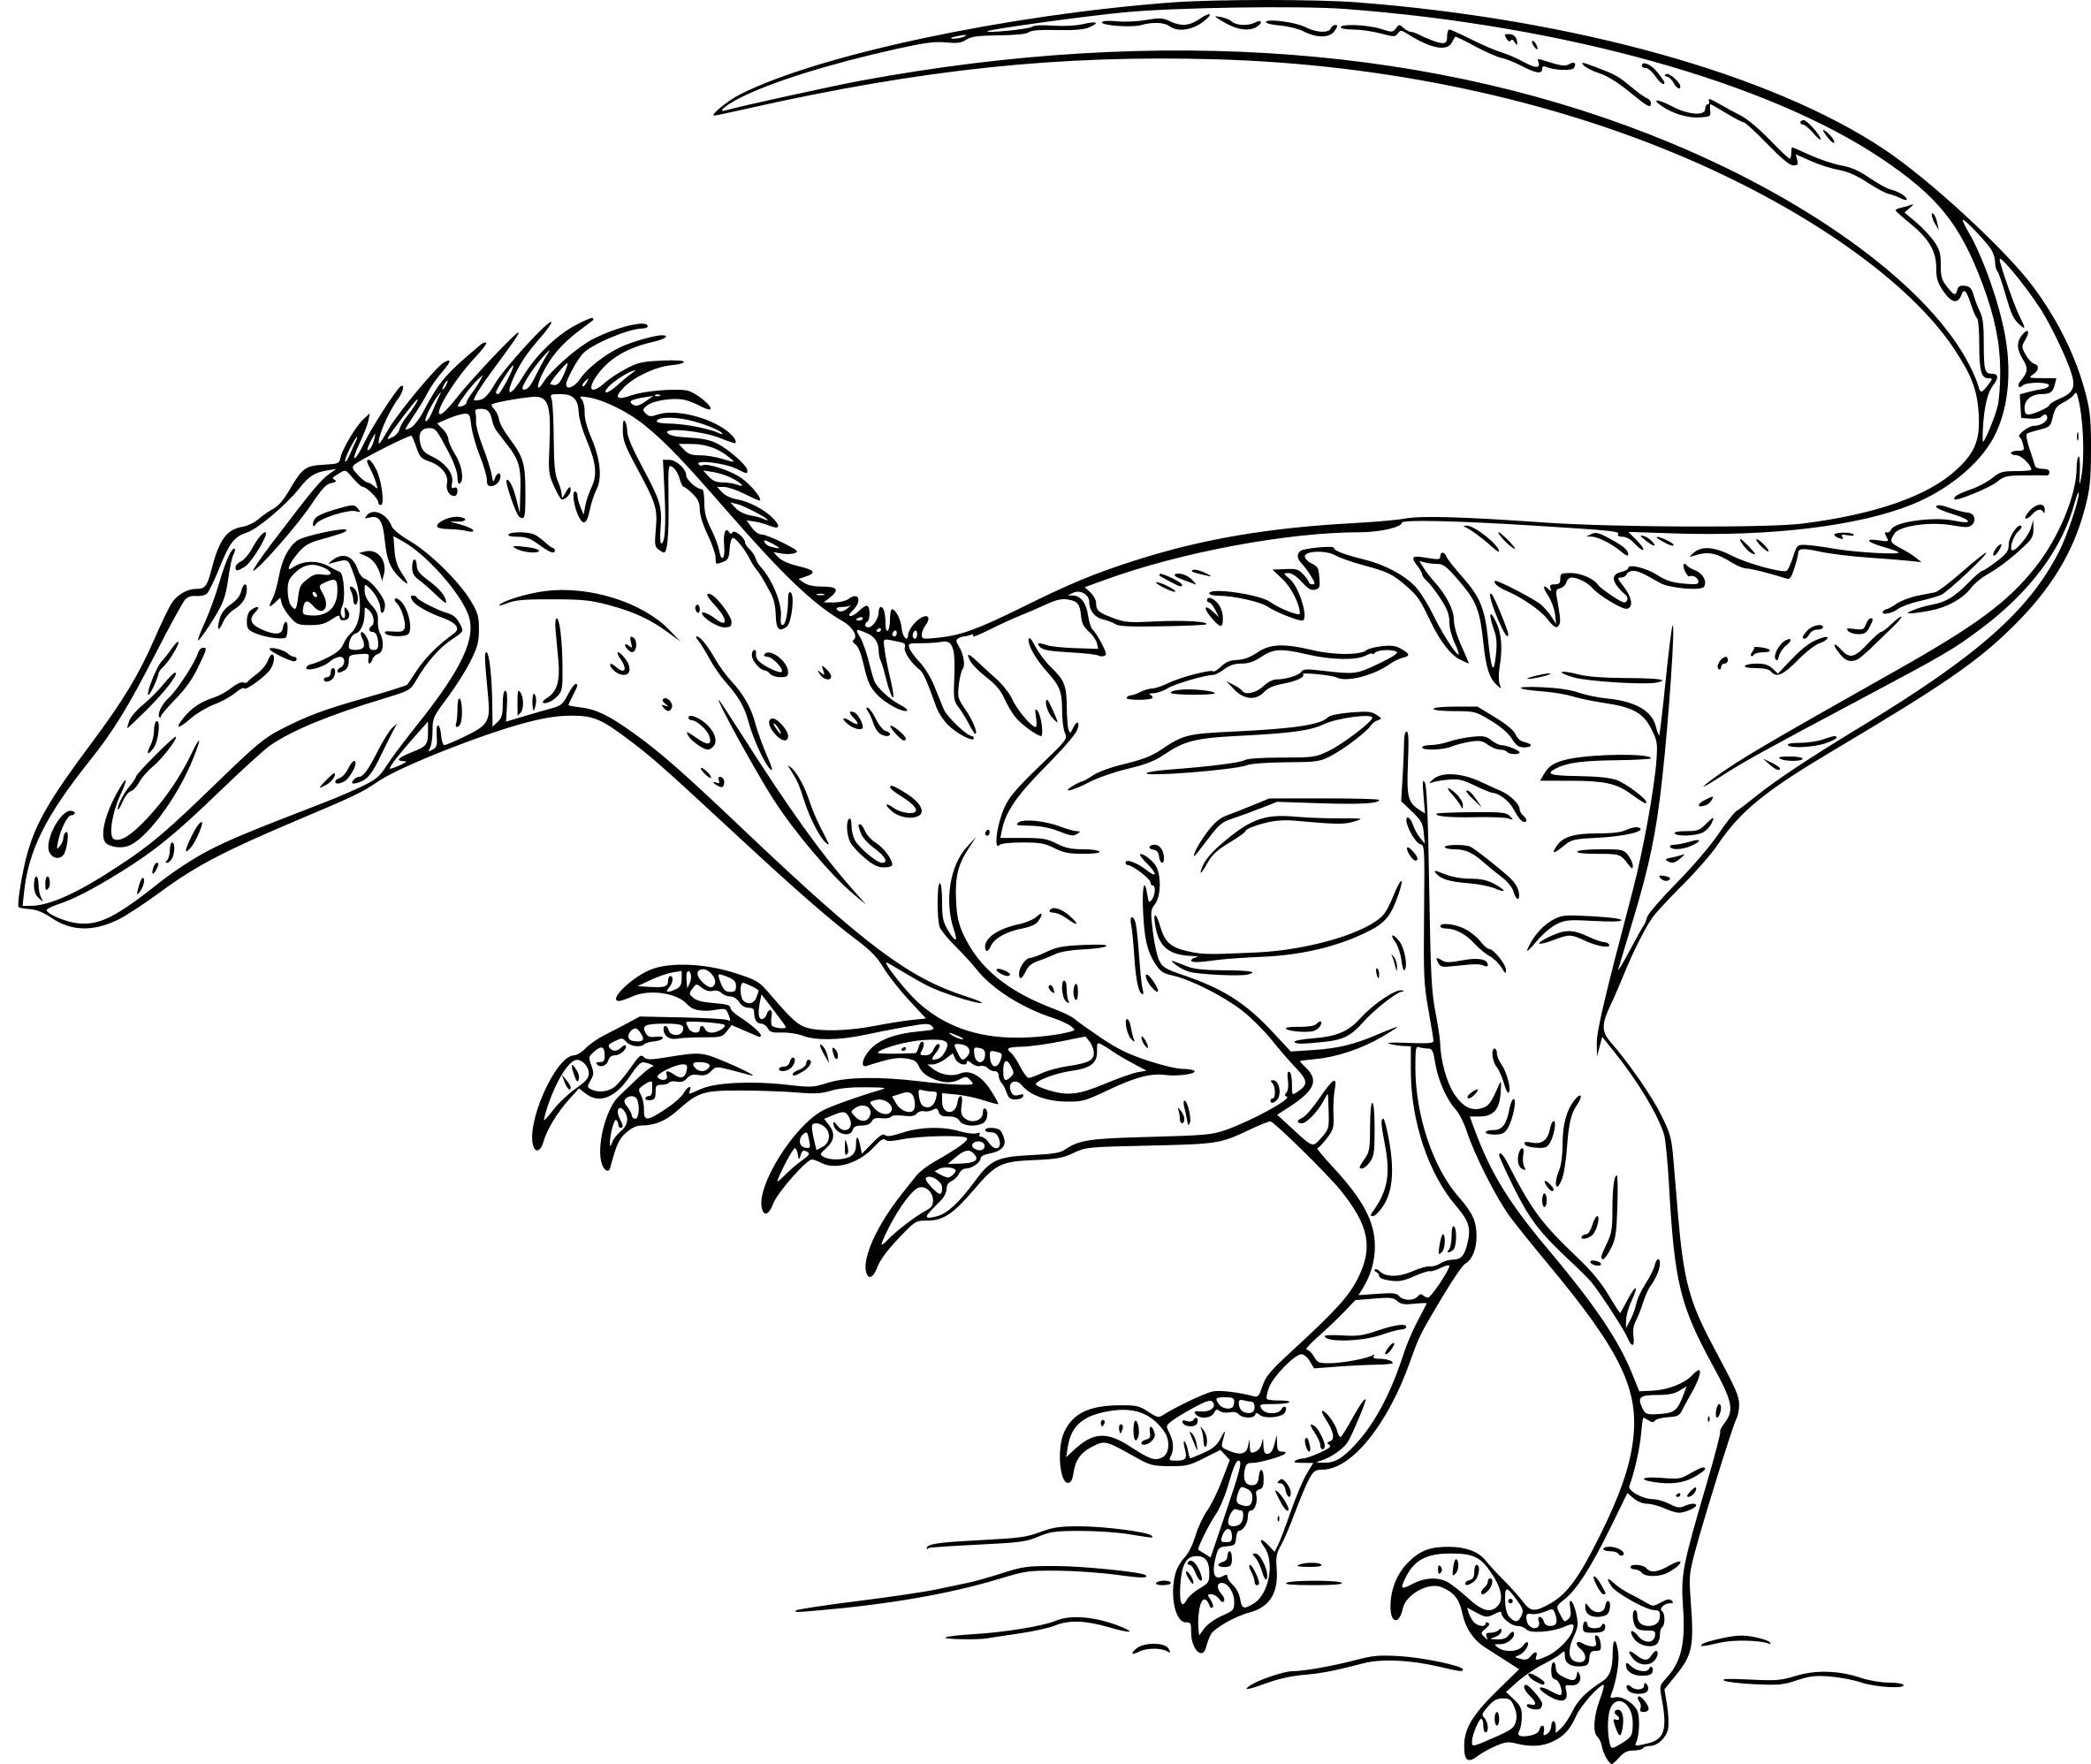 Coloriage Velociraptor - Dessin Facile Couleur encequiconcerne Dessin De Dinosaures 